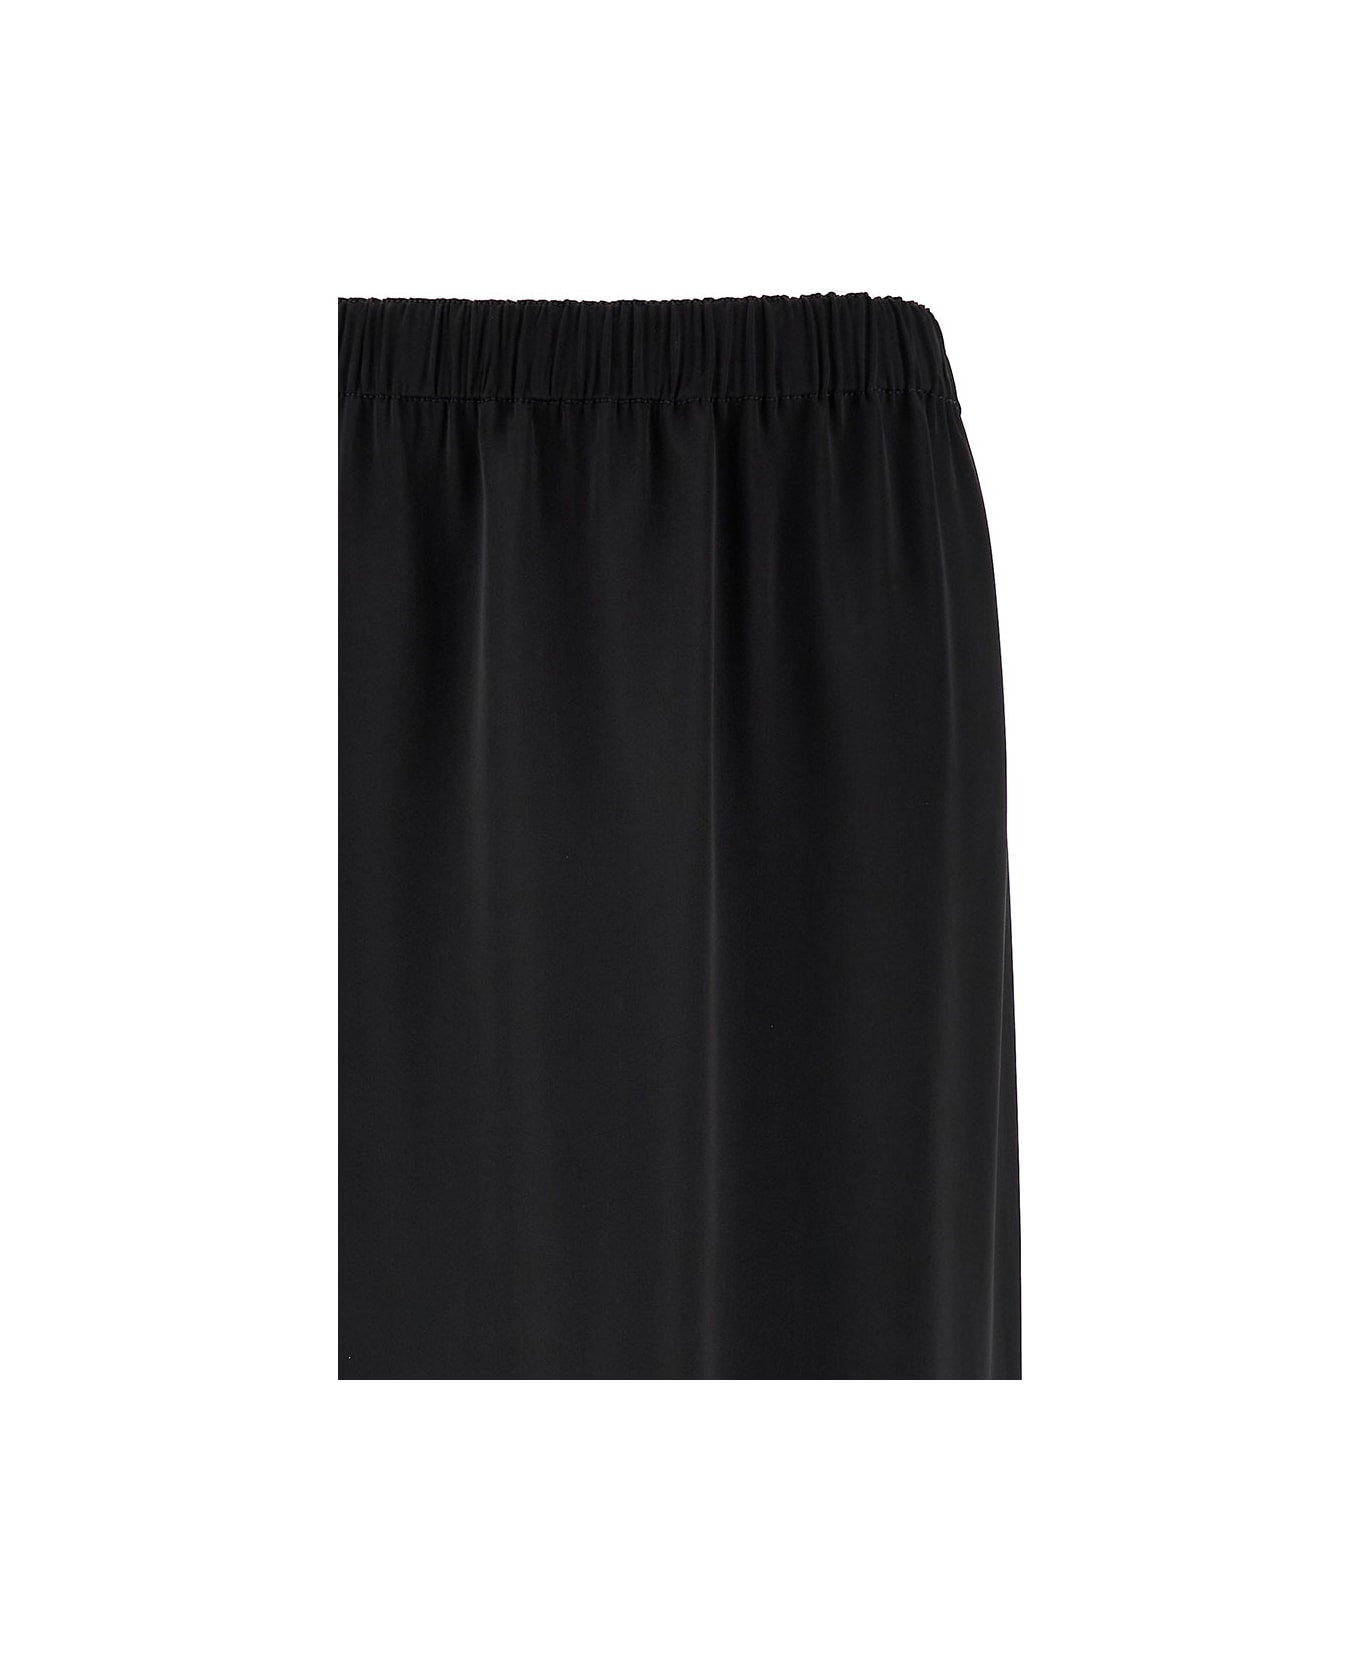 Fabiana Filippi Long Black Skirt With Elastic Waistband And Split In Fabric Woman - Black